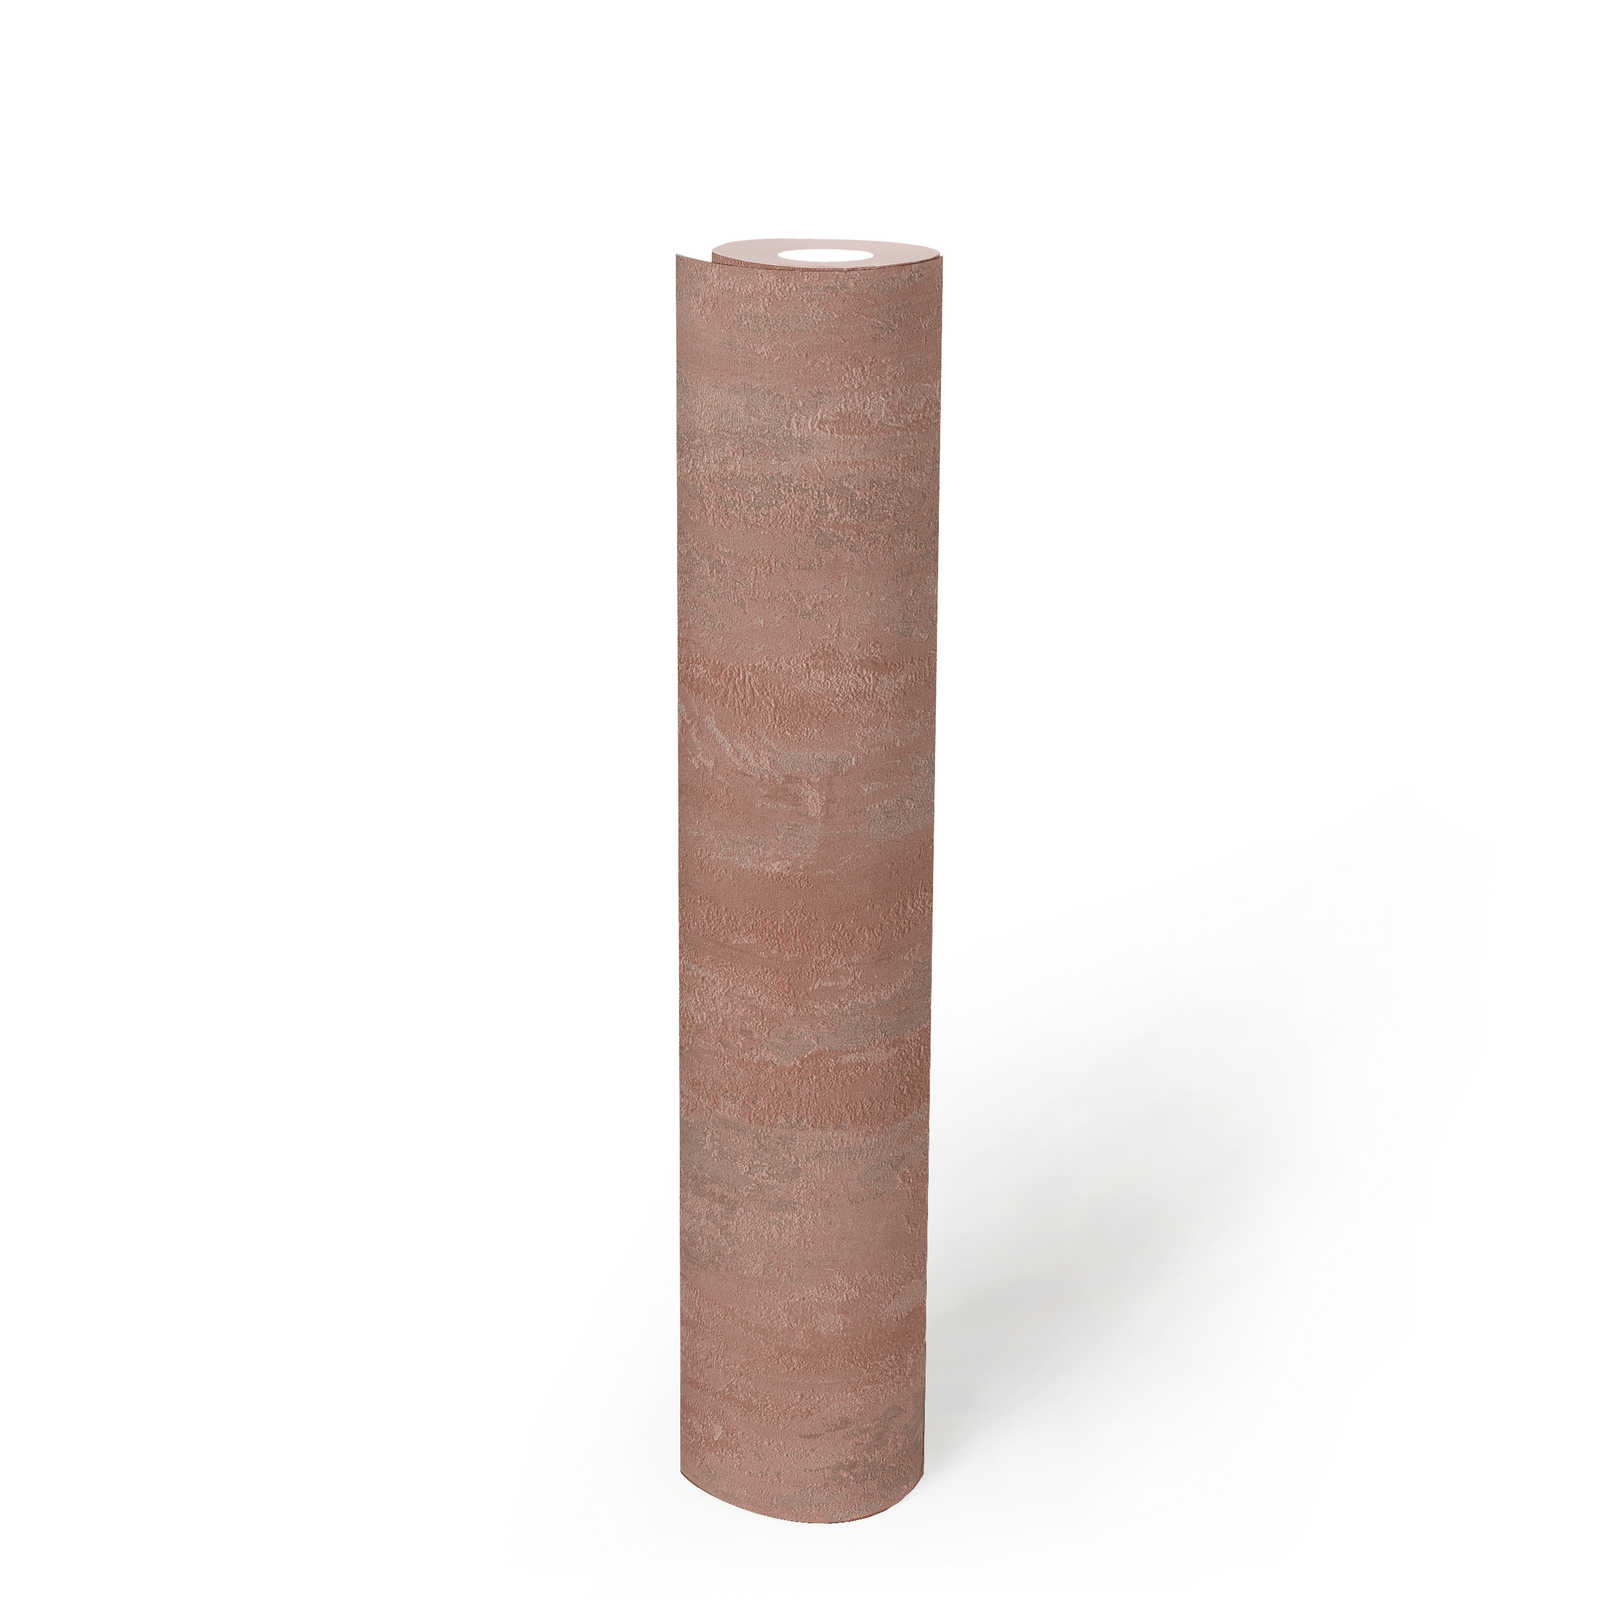             Tapete Industrial Stil mit Struktureffekt – Metallic, Rosa
        